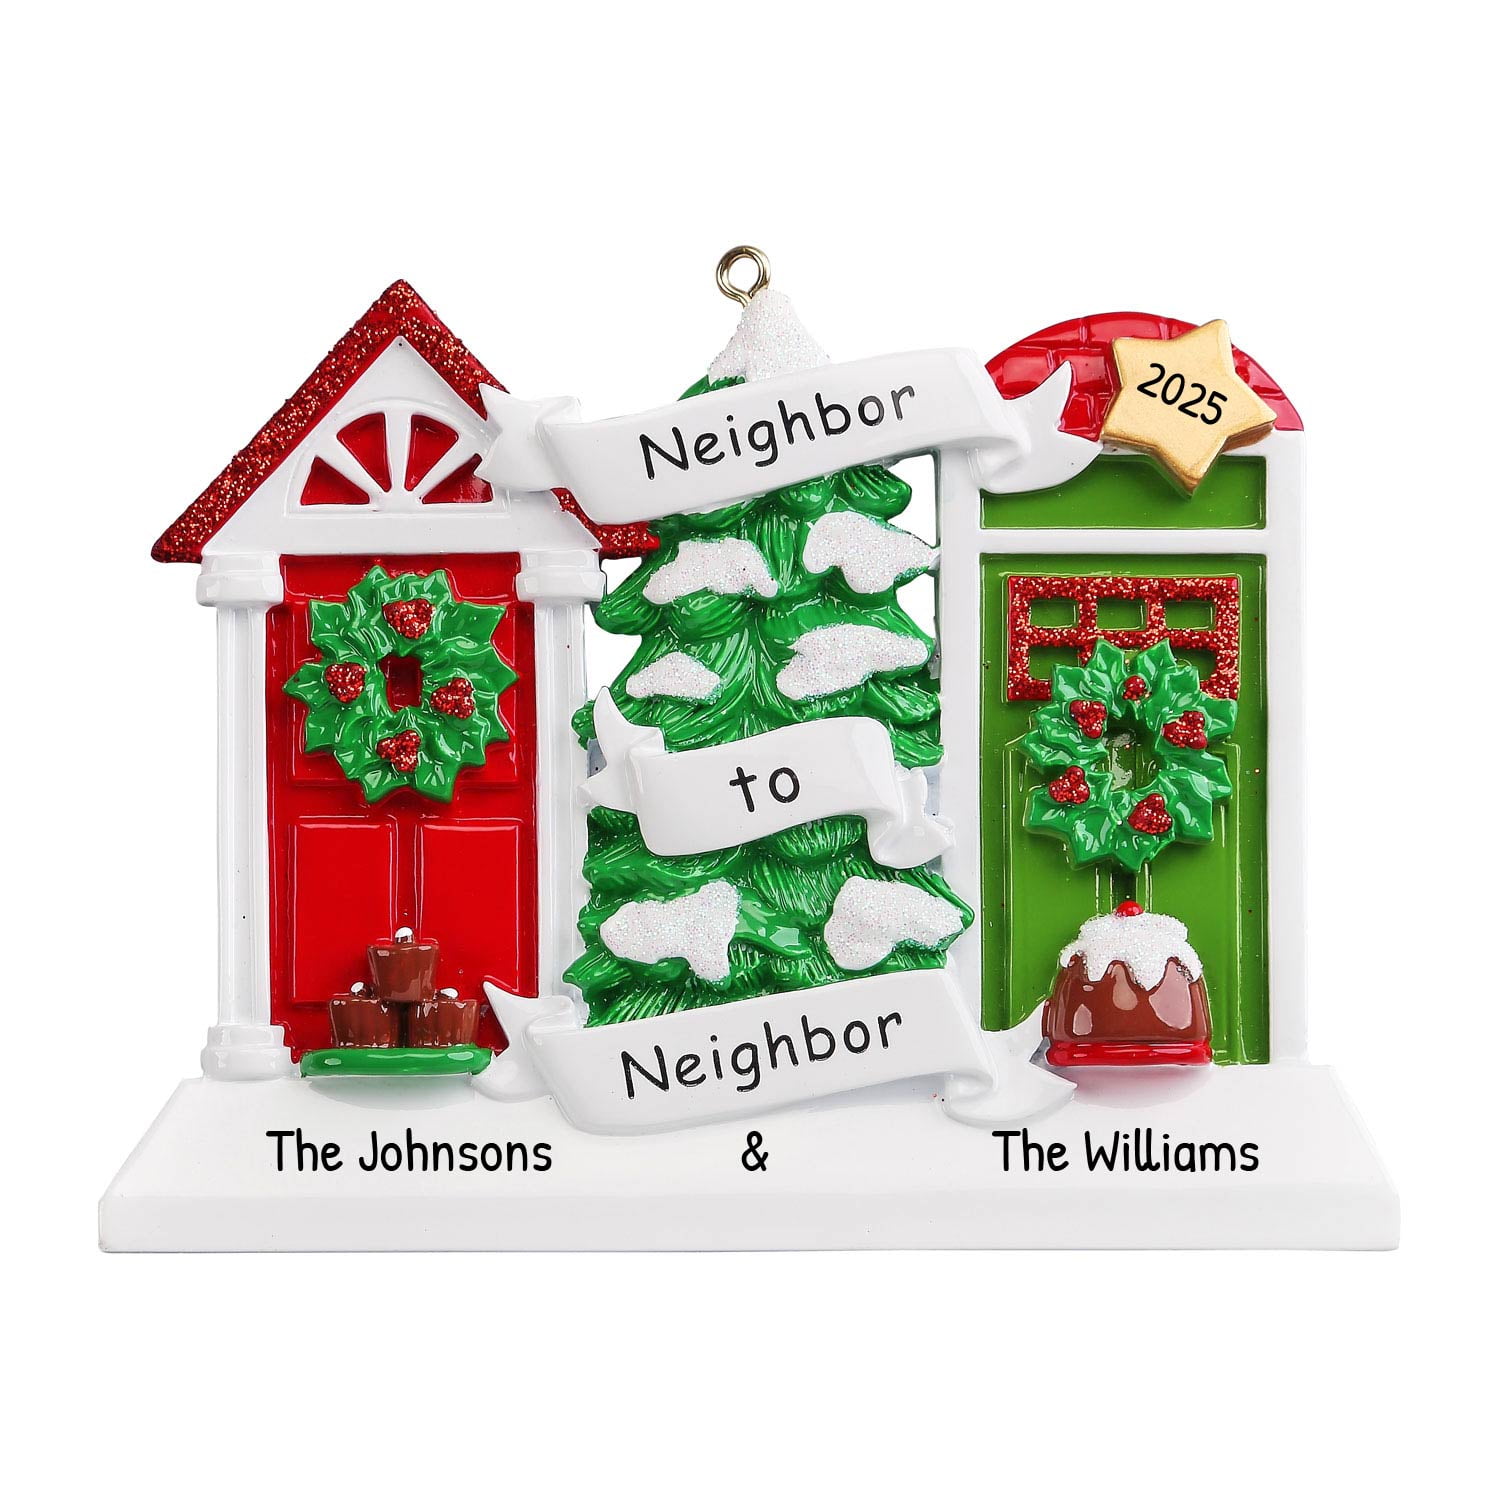  LEZAME Neighbor Gifts - Neighbor Christmas Ornament, Neighbor  Ornament, Friendship Christmas Ornament - Gift for Neighbor Friend -  Gingerbread Neighbor Design, Comes in Gift Box : Home & Kitchen